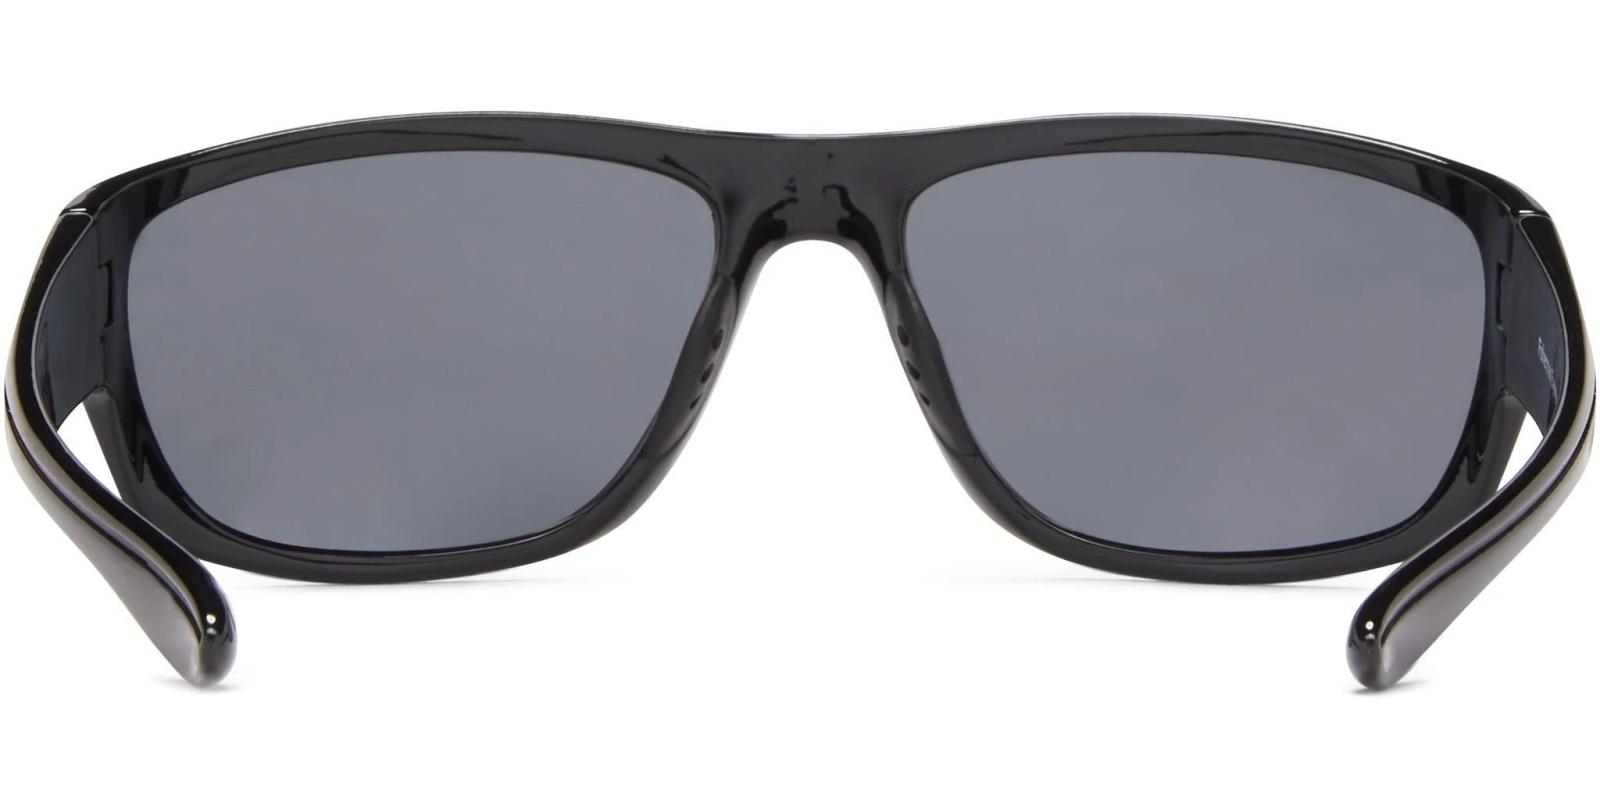 icu Eyewear Striper Sunglasses